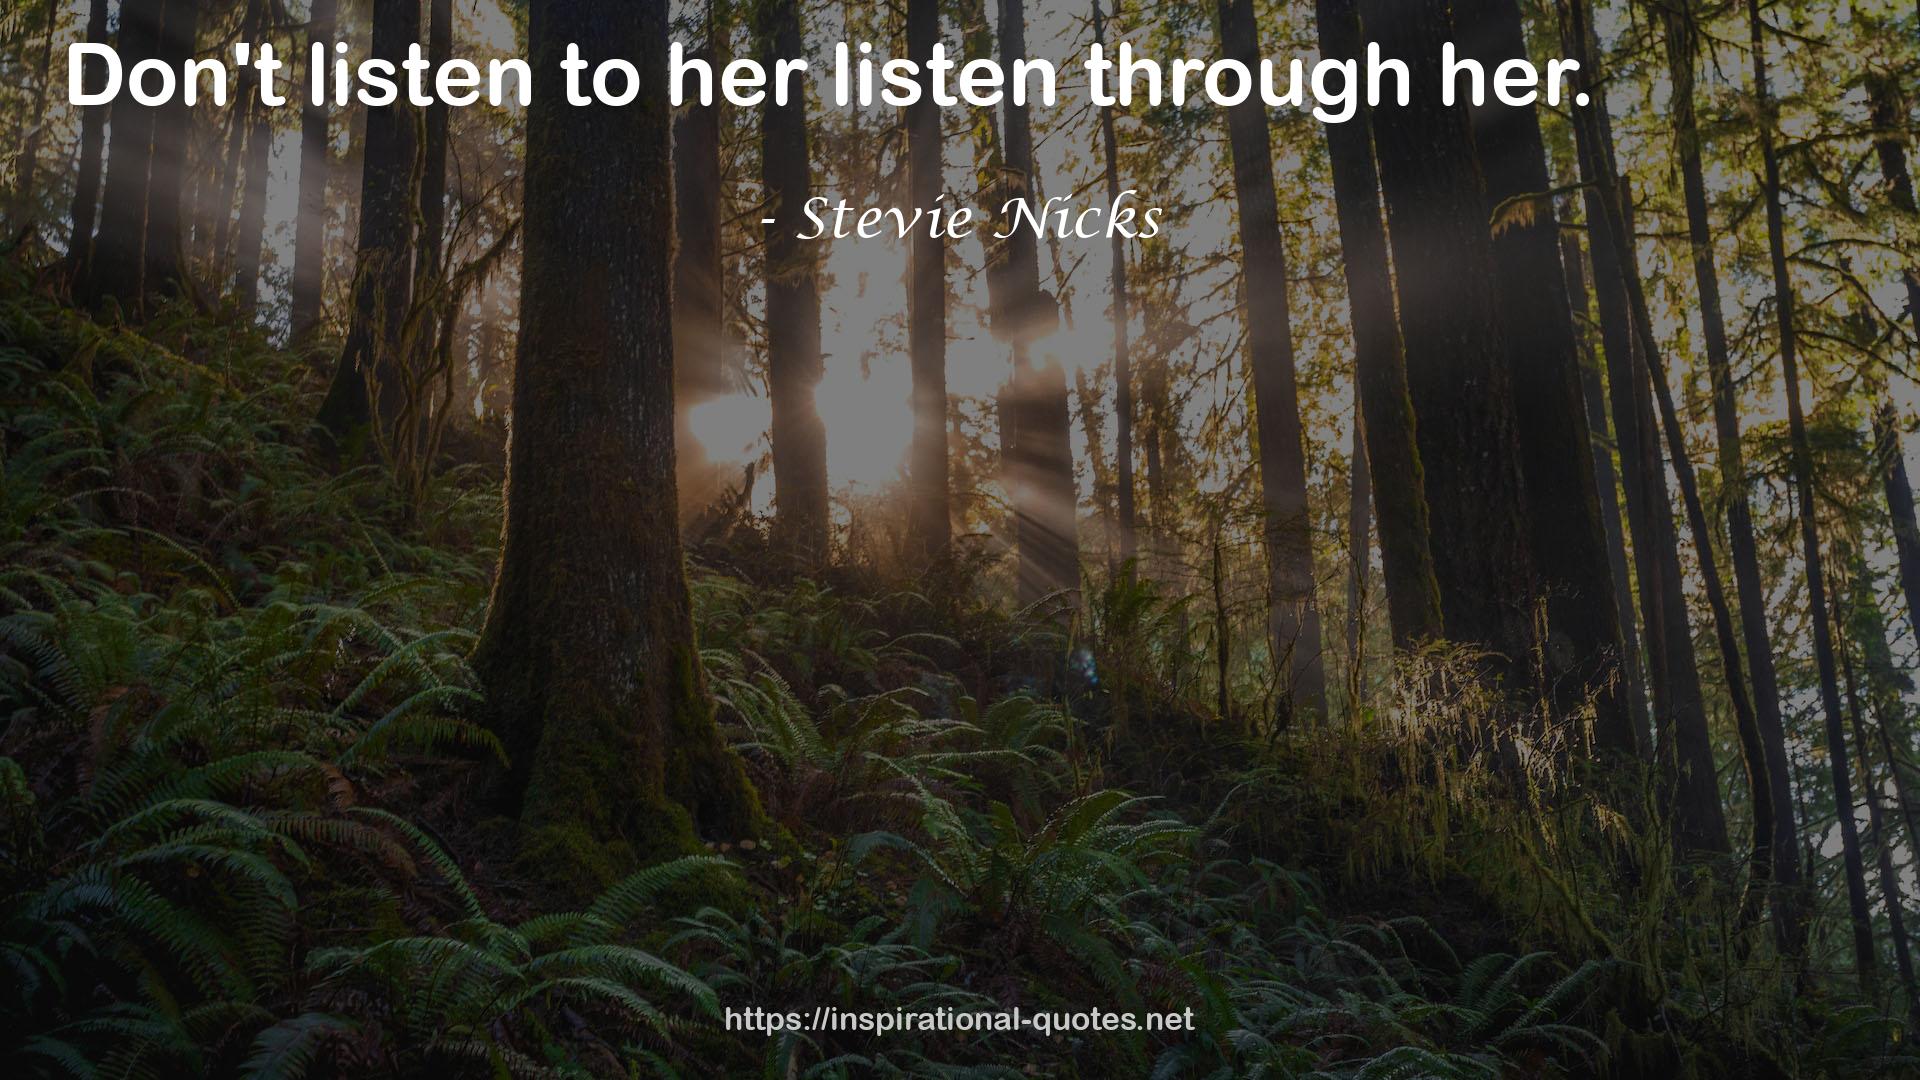 Stevie Nicks QUOTES